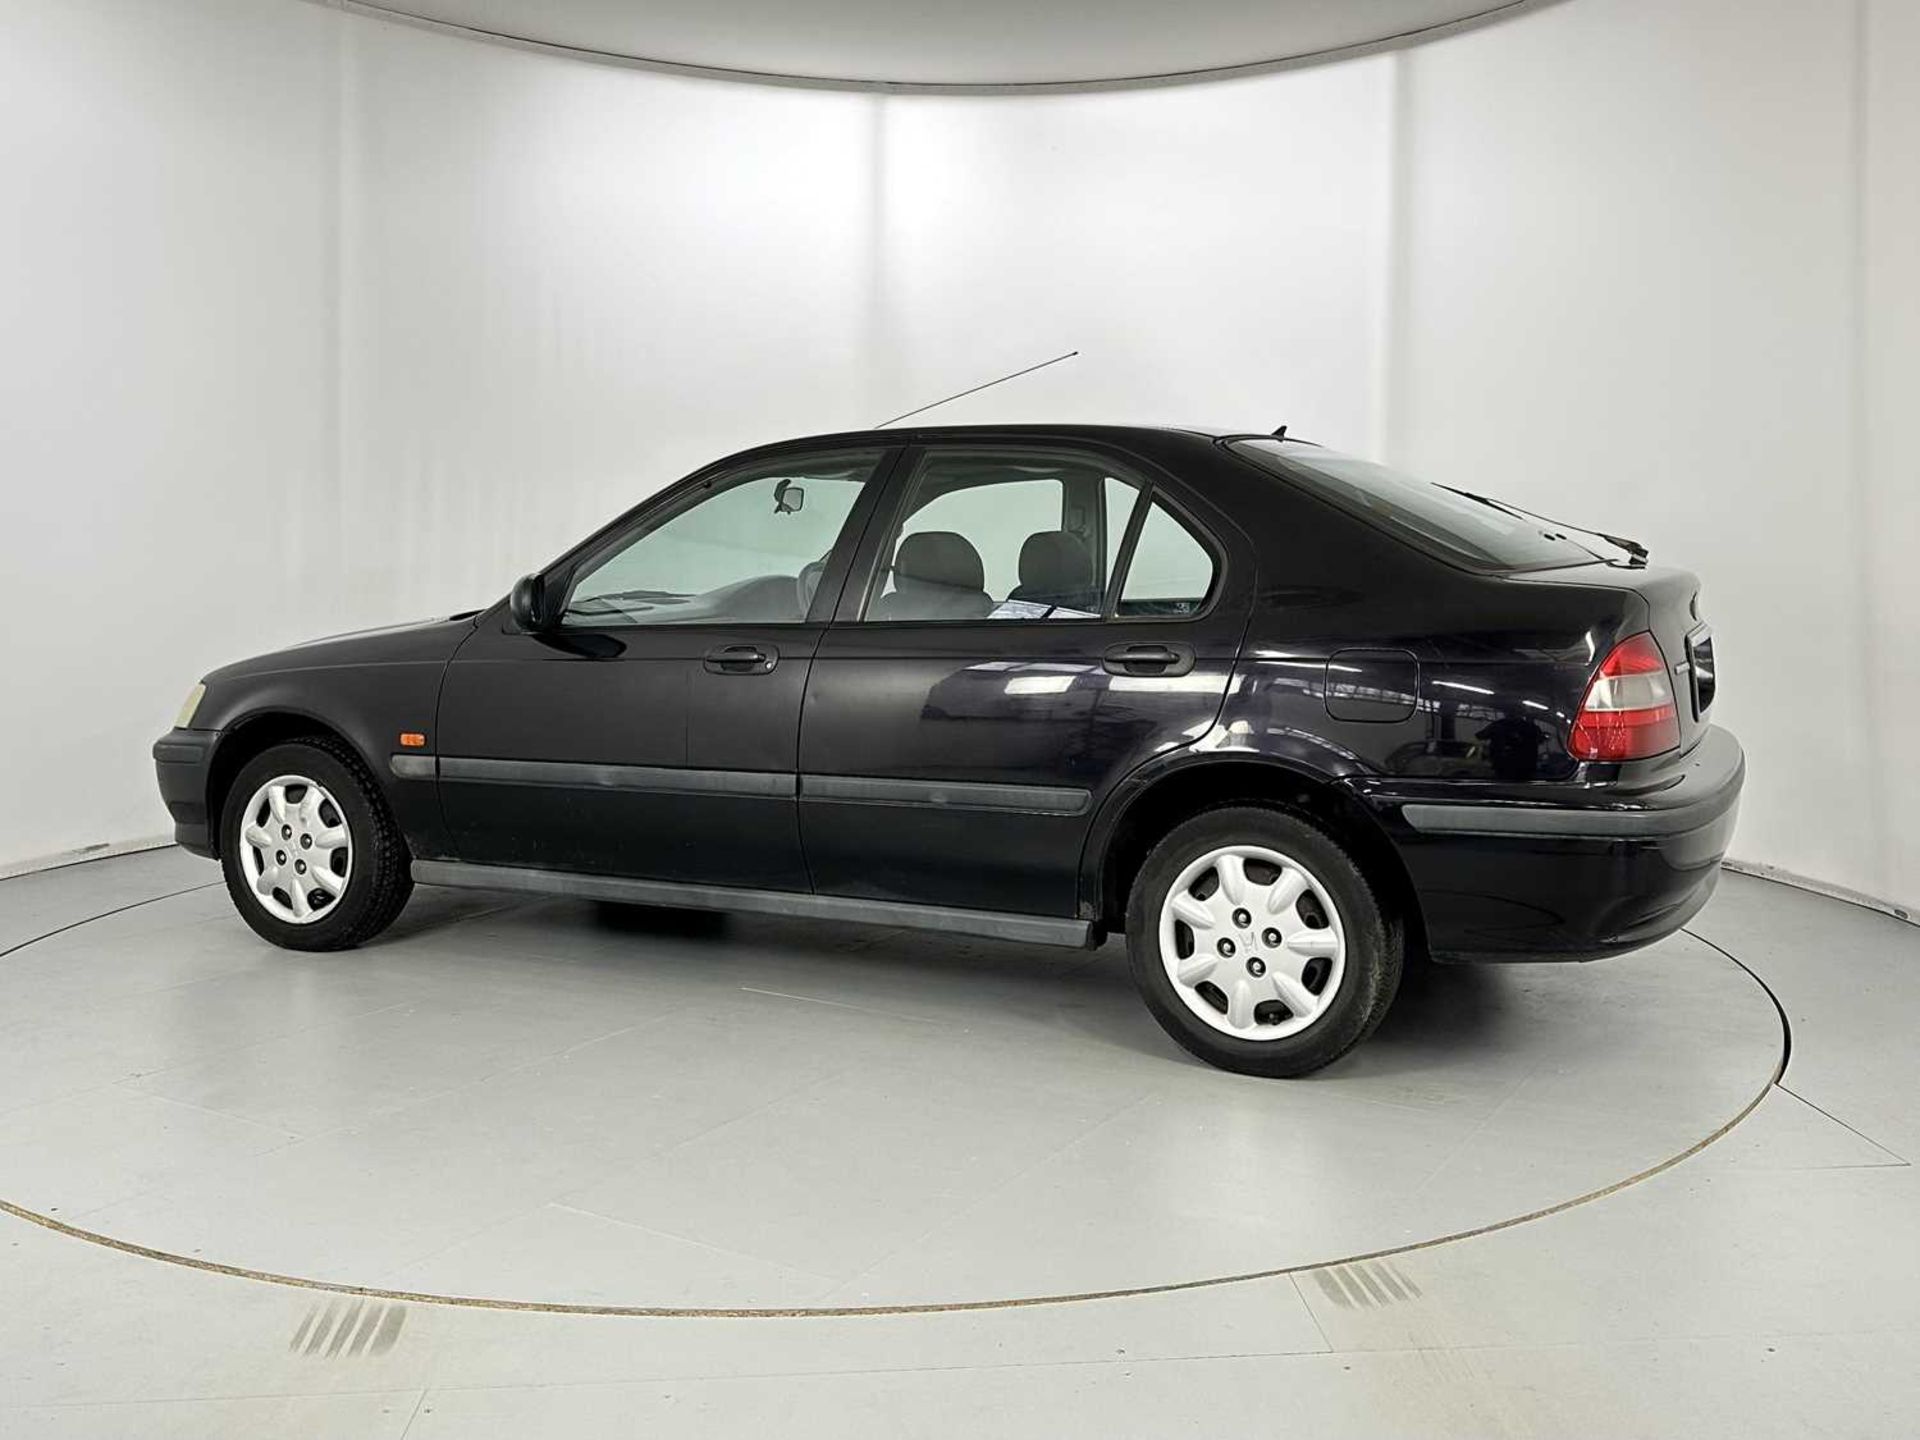 1999 Honda Civic - Image 6 of 34